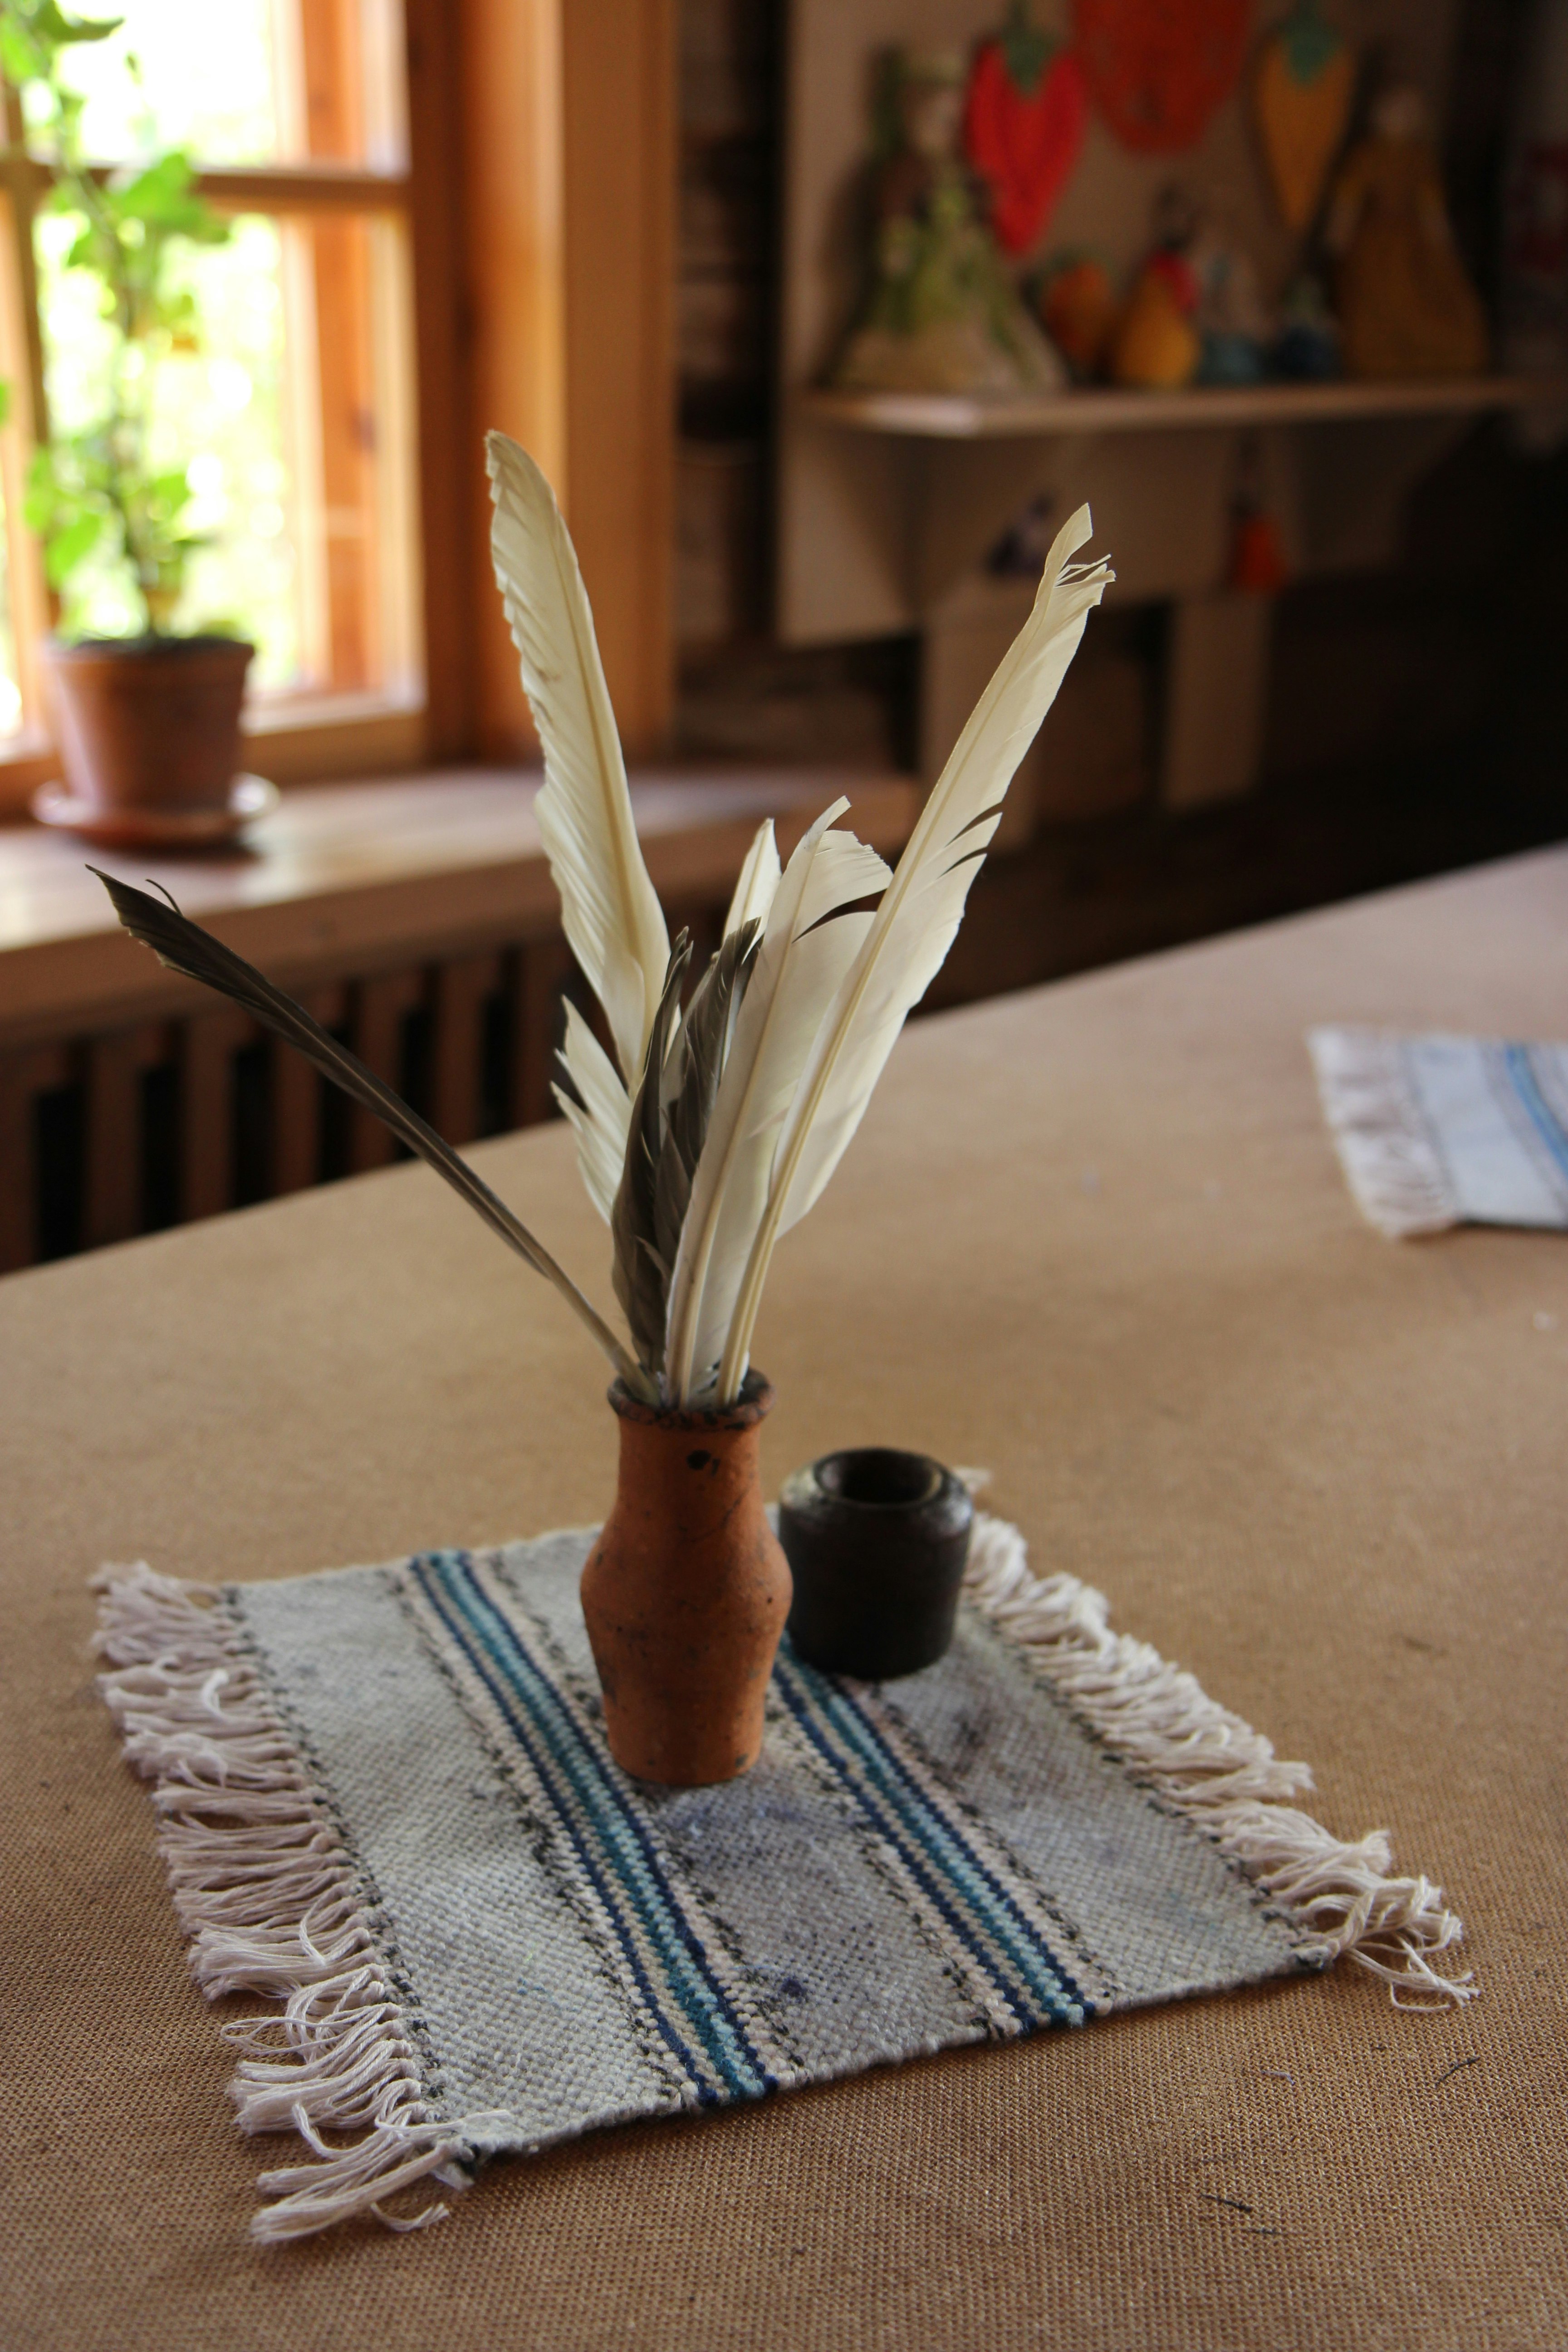 white feather on brown ceramic pot